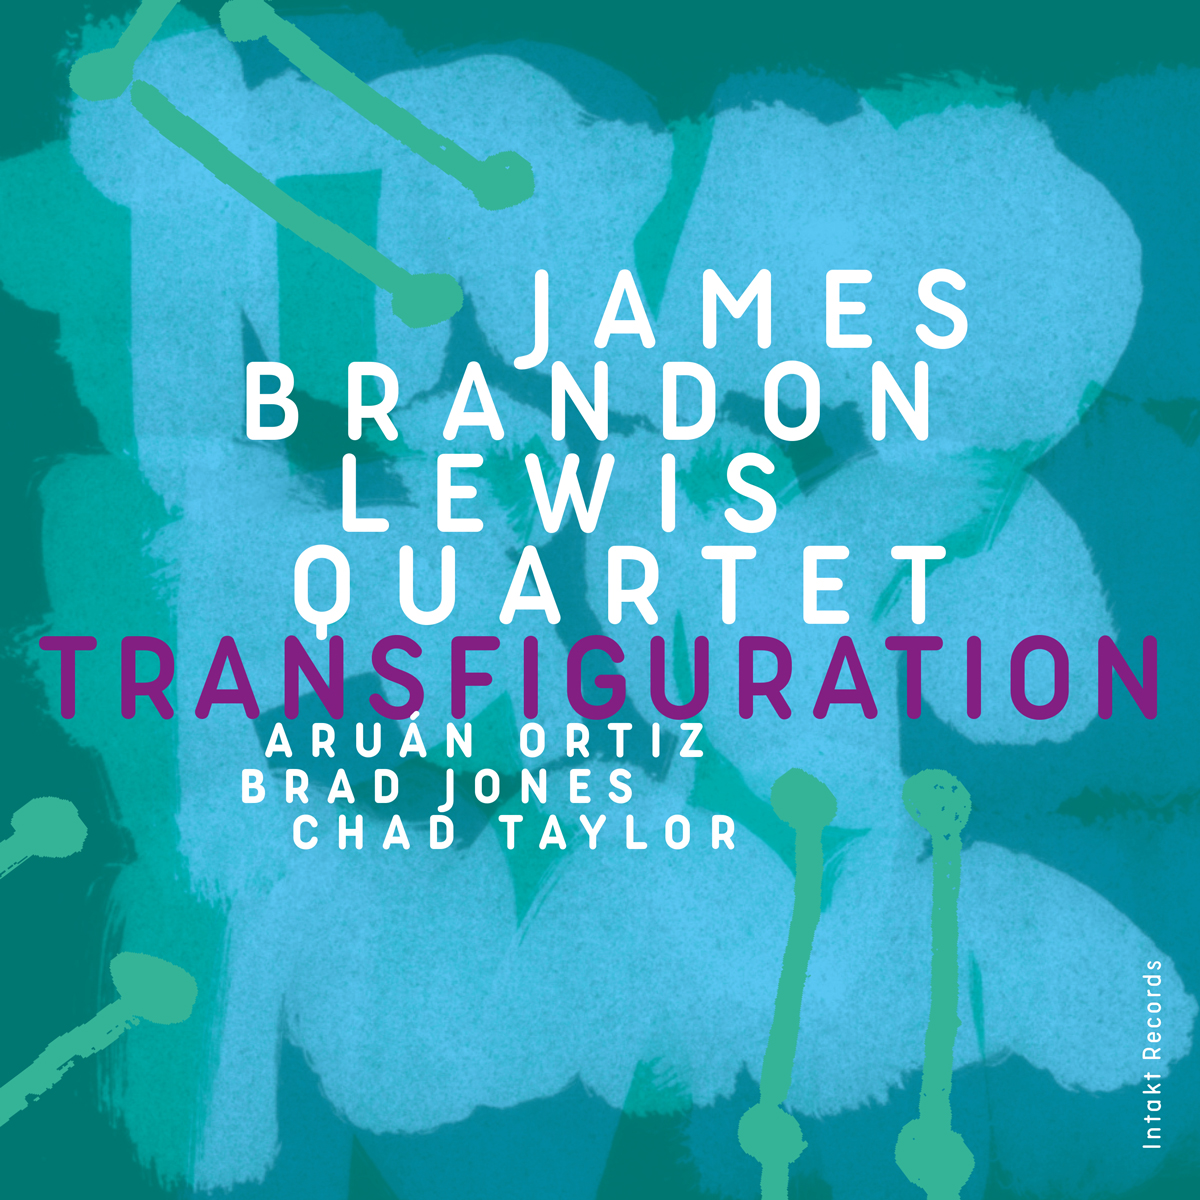 JAMES BRANDON LEWIS QUARTET
TRANSFIGURATION cover front intakt records